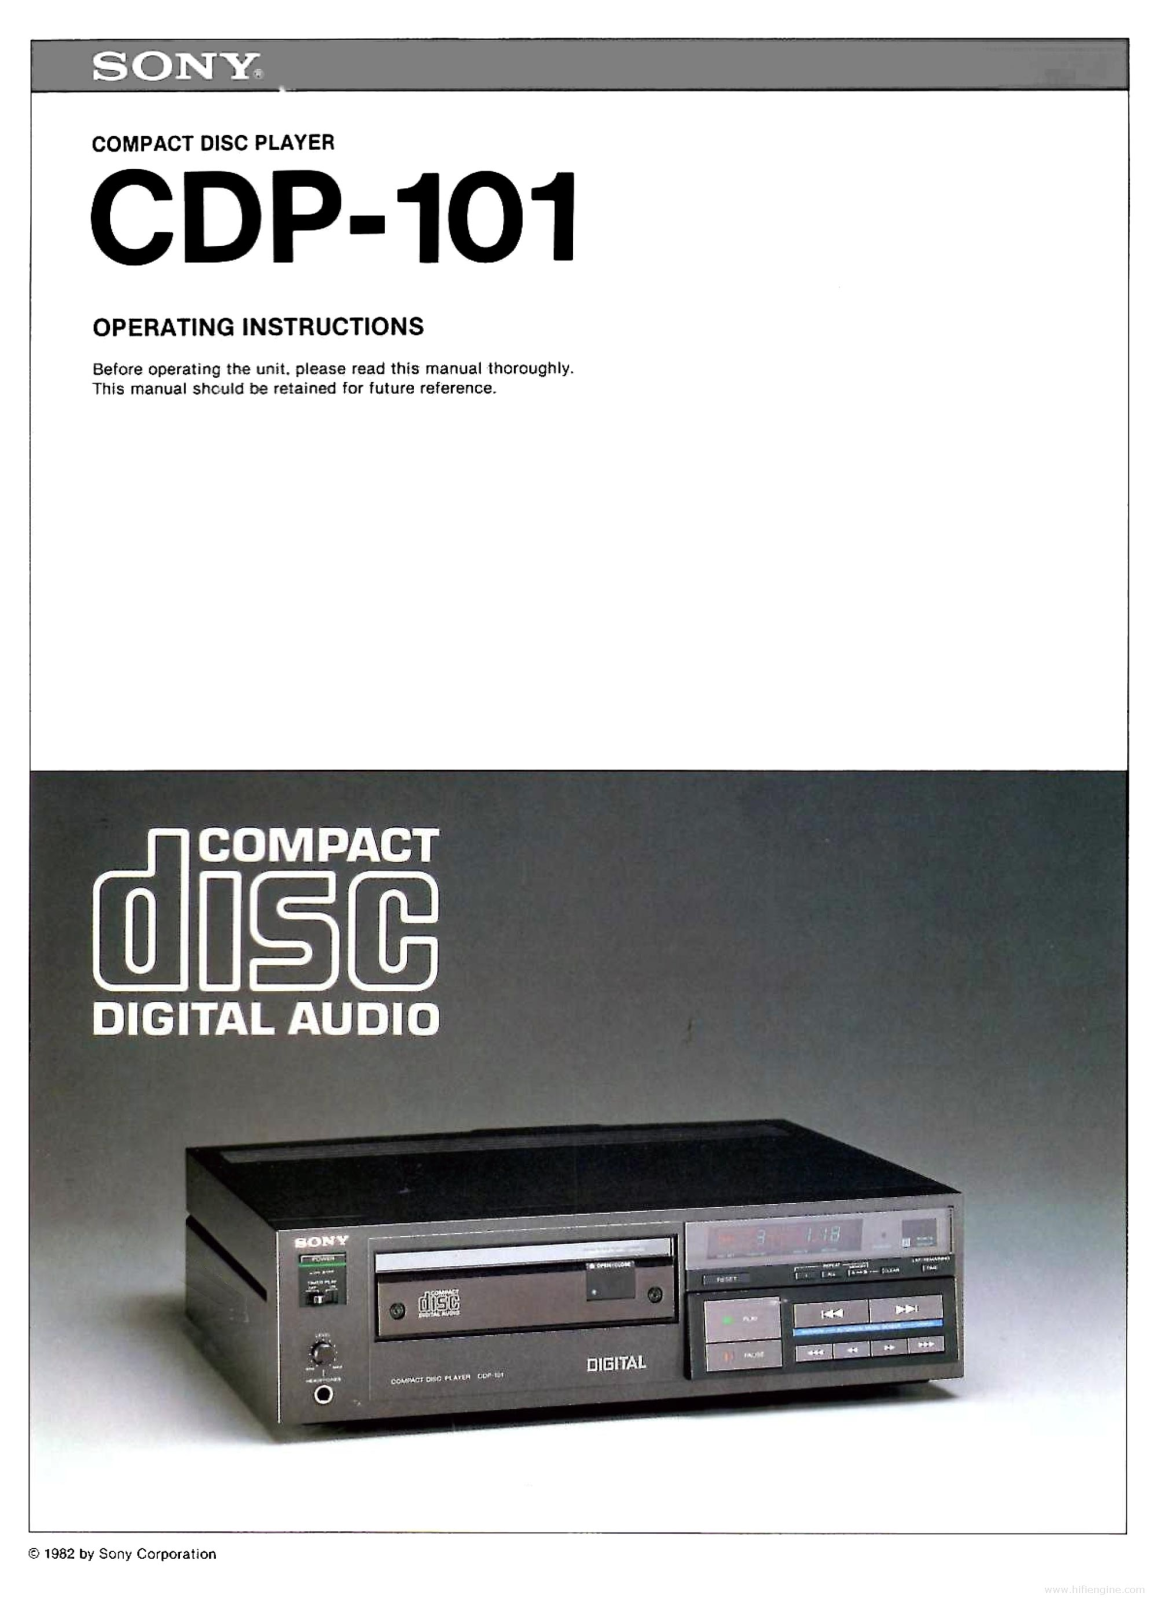 Sony cdp-101 User Manual